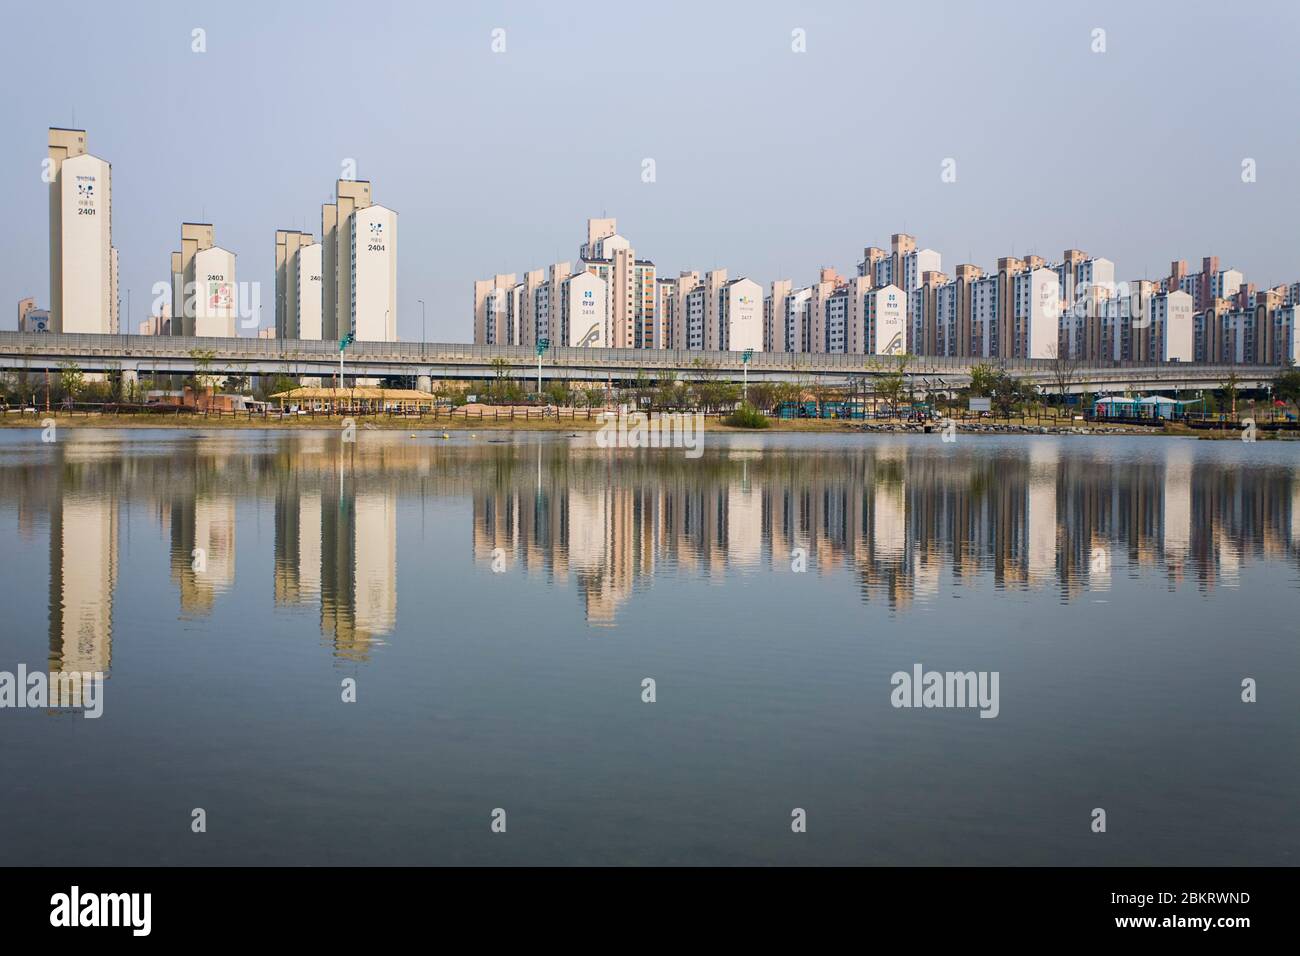 South Korea, Gyeonggi Province, Bucheon, reflection of buildings in a lake Stock Photo